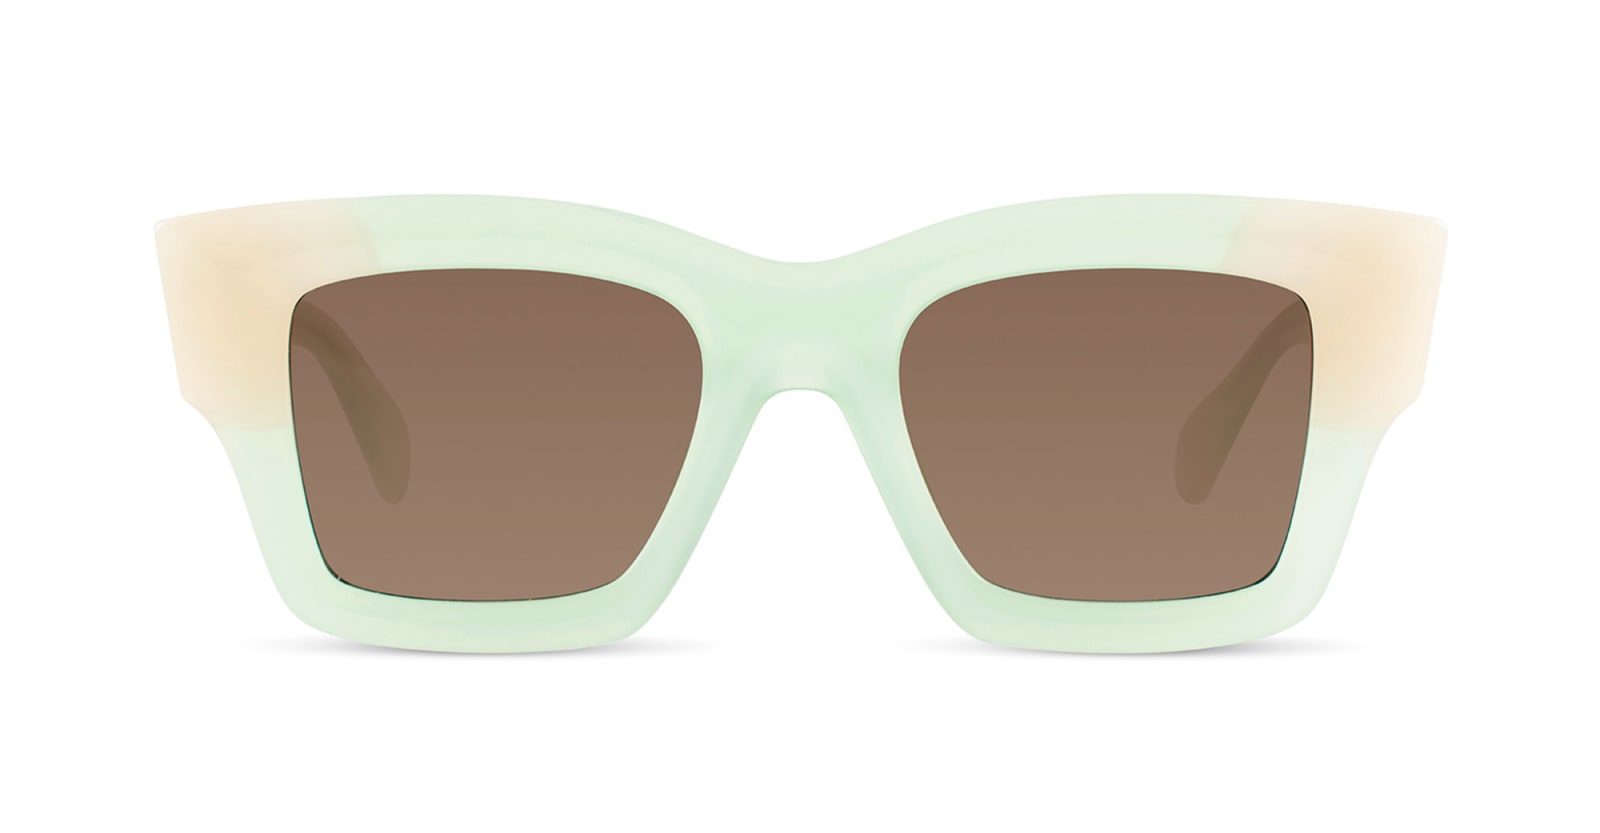 Les Lunettes Baci - Light Green Sunglasses